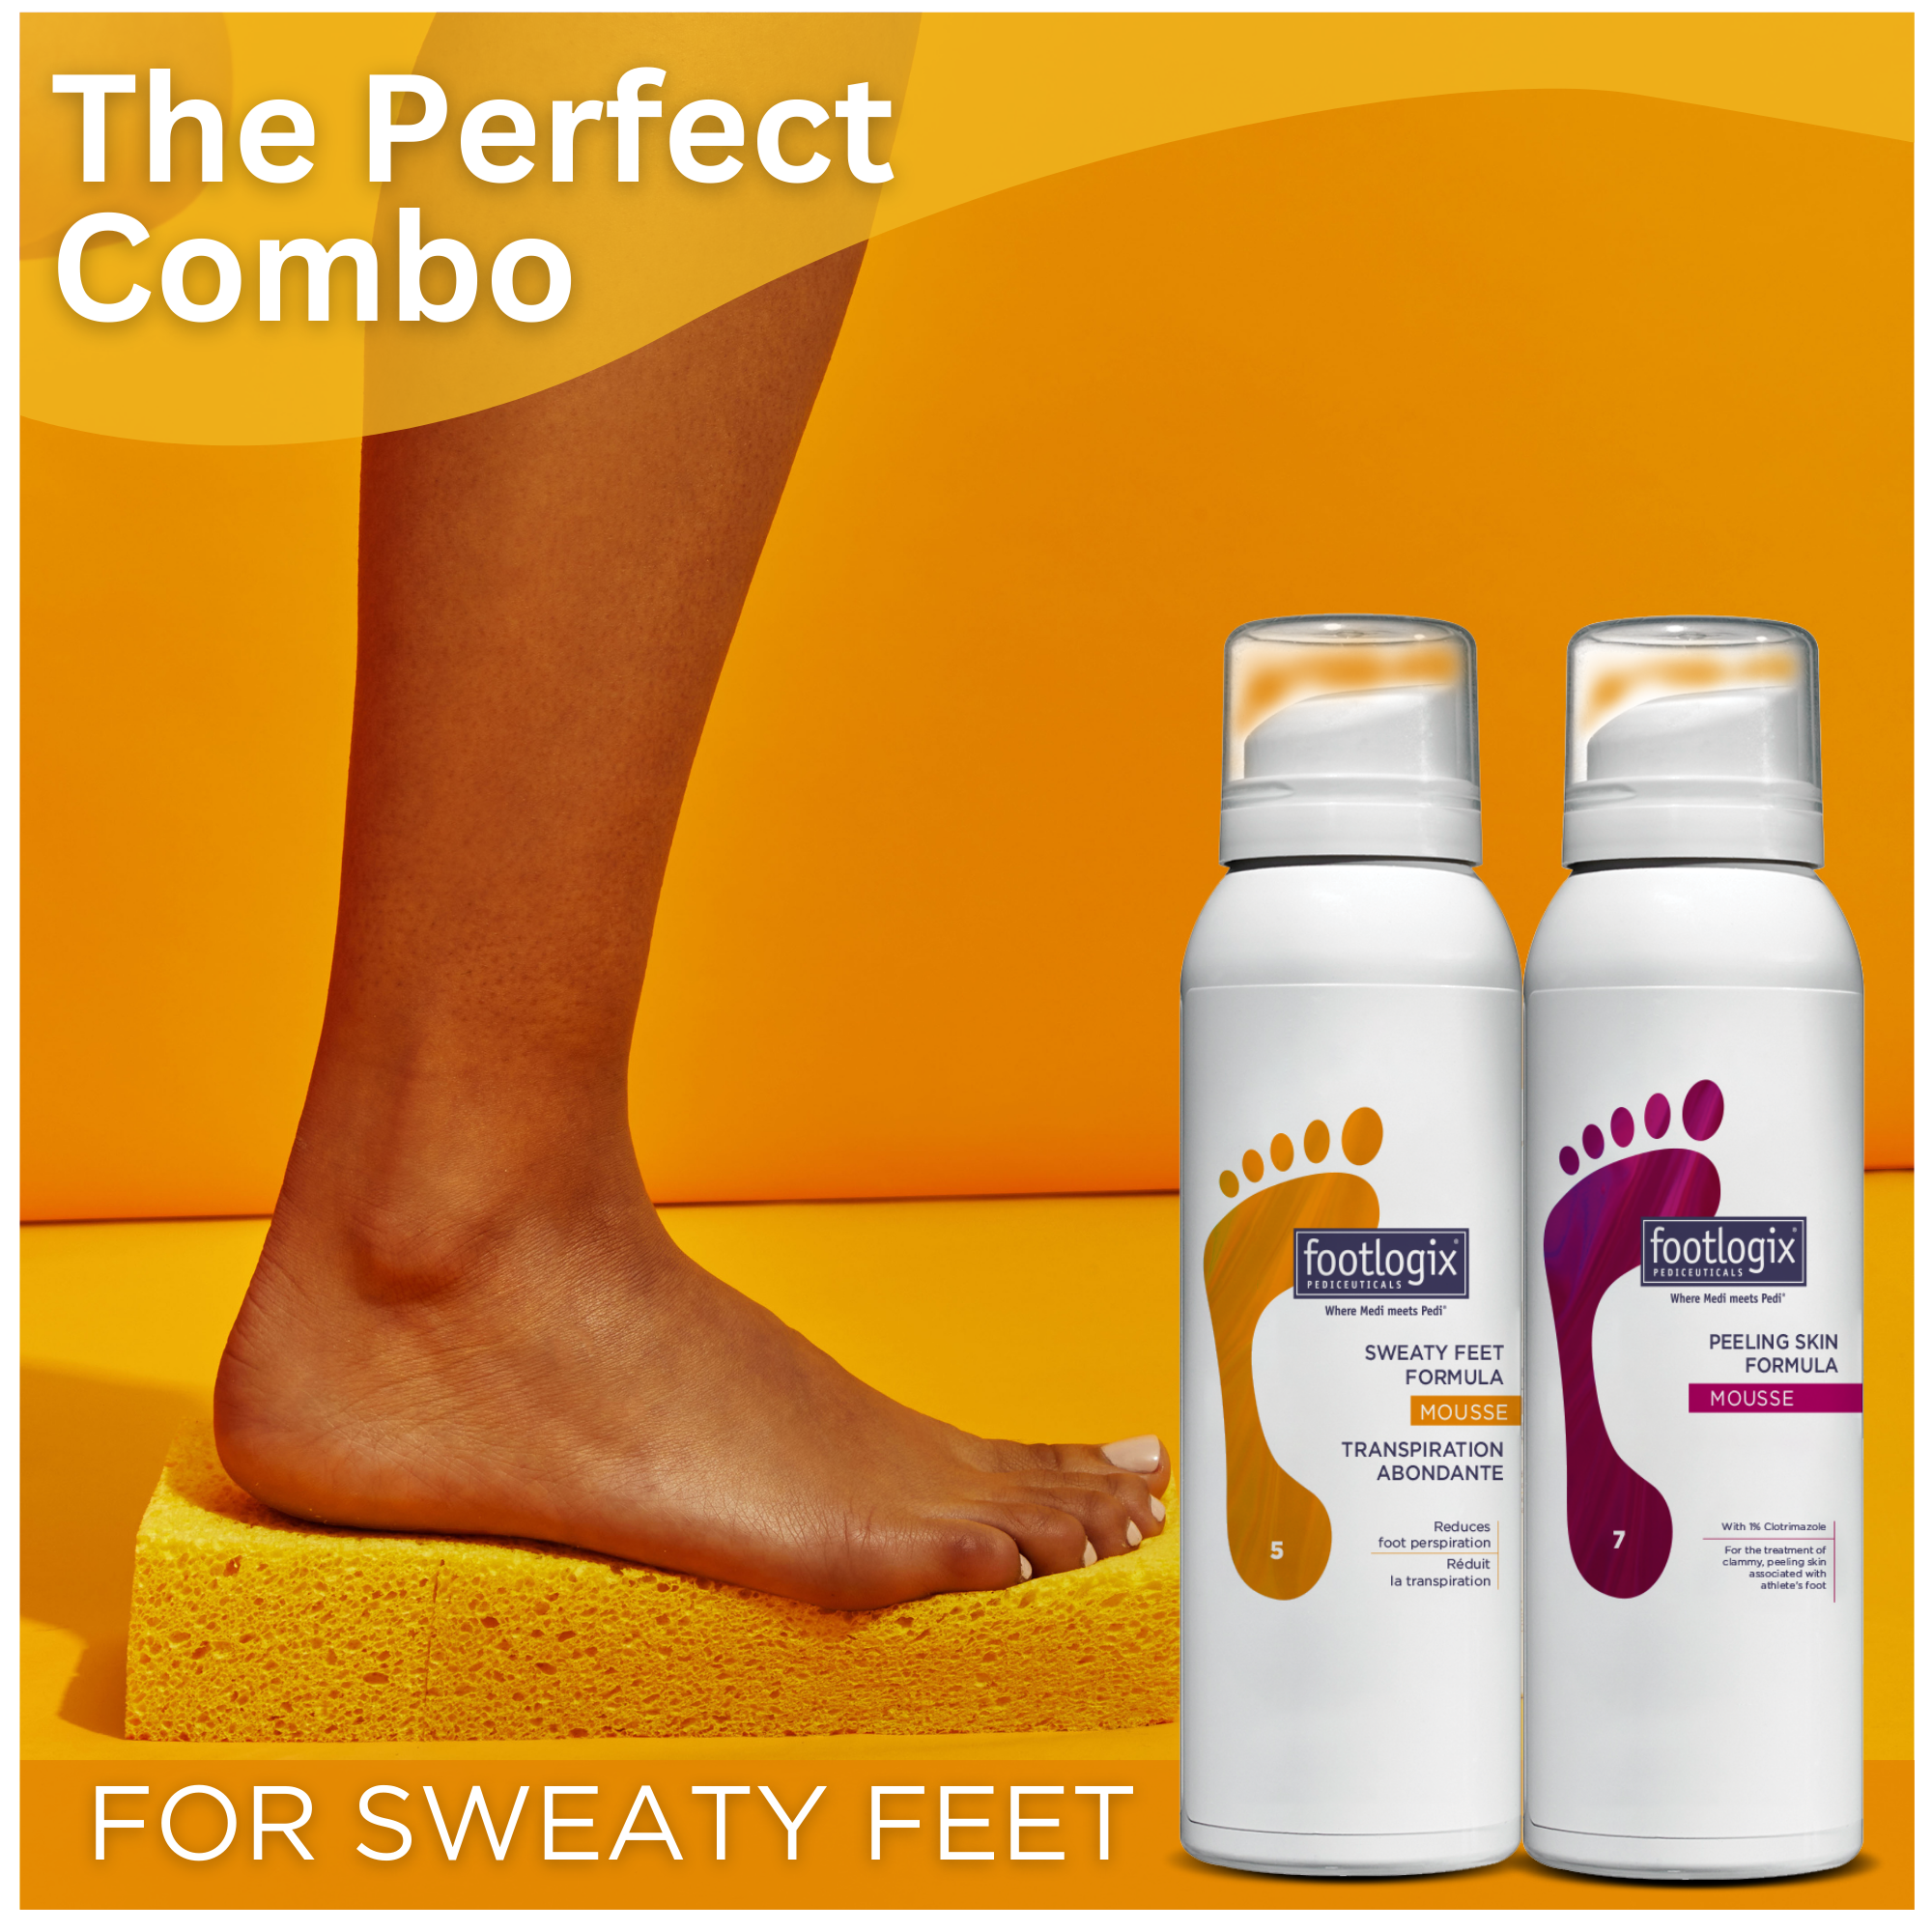 Footlogix Sweaty Feet Formula